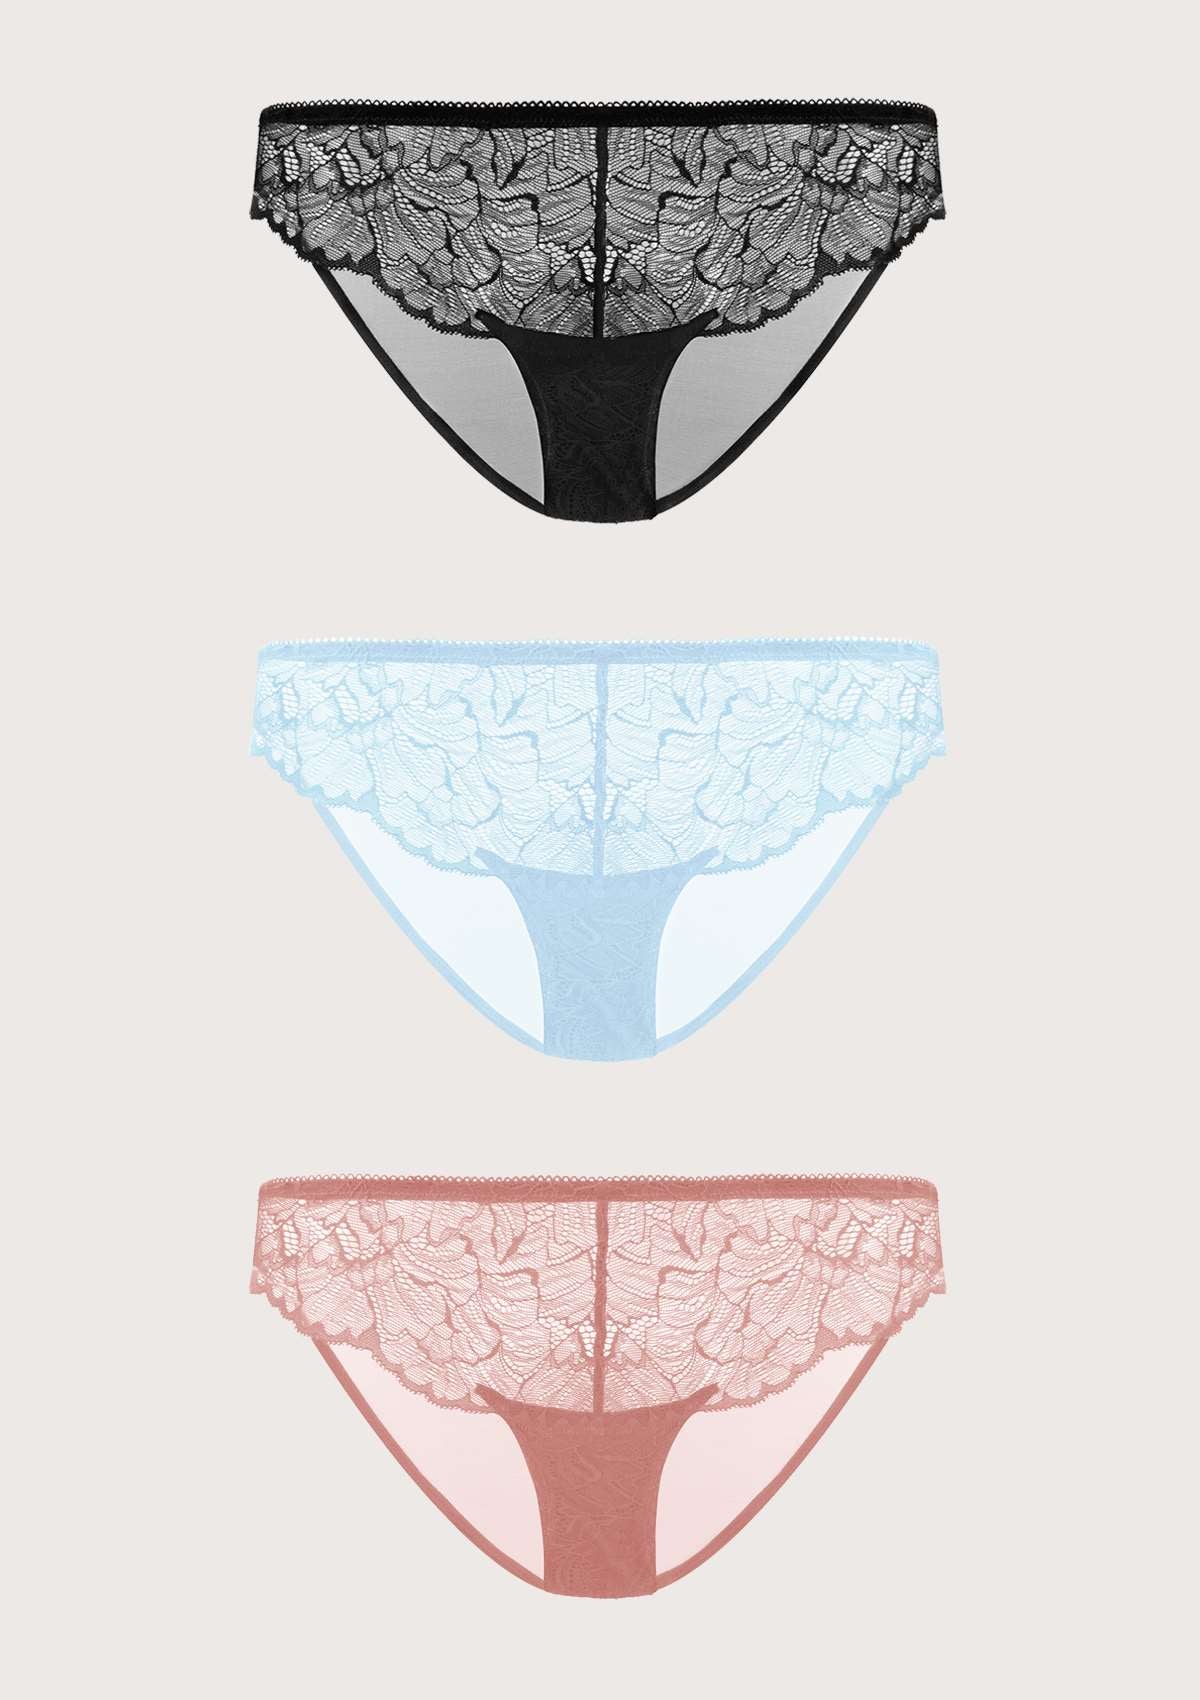 HSIA Blossom Lace Mesh Bikini Underwears 3 Pack - XXL / Black+White+Dusty Peach